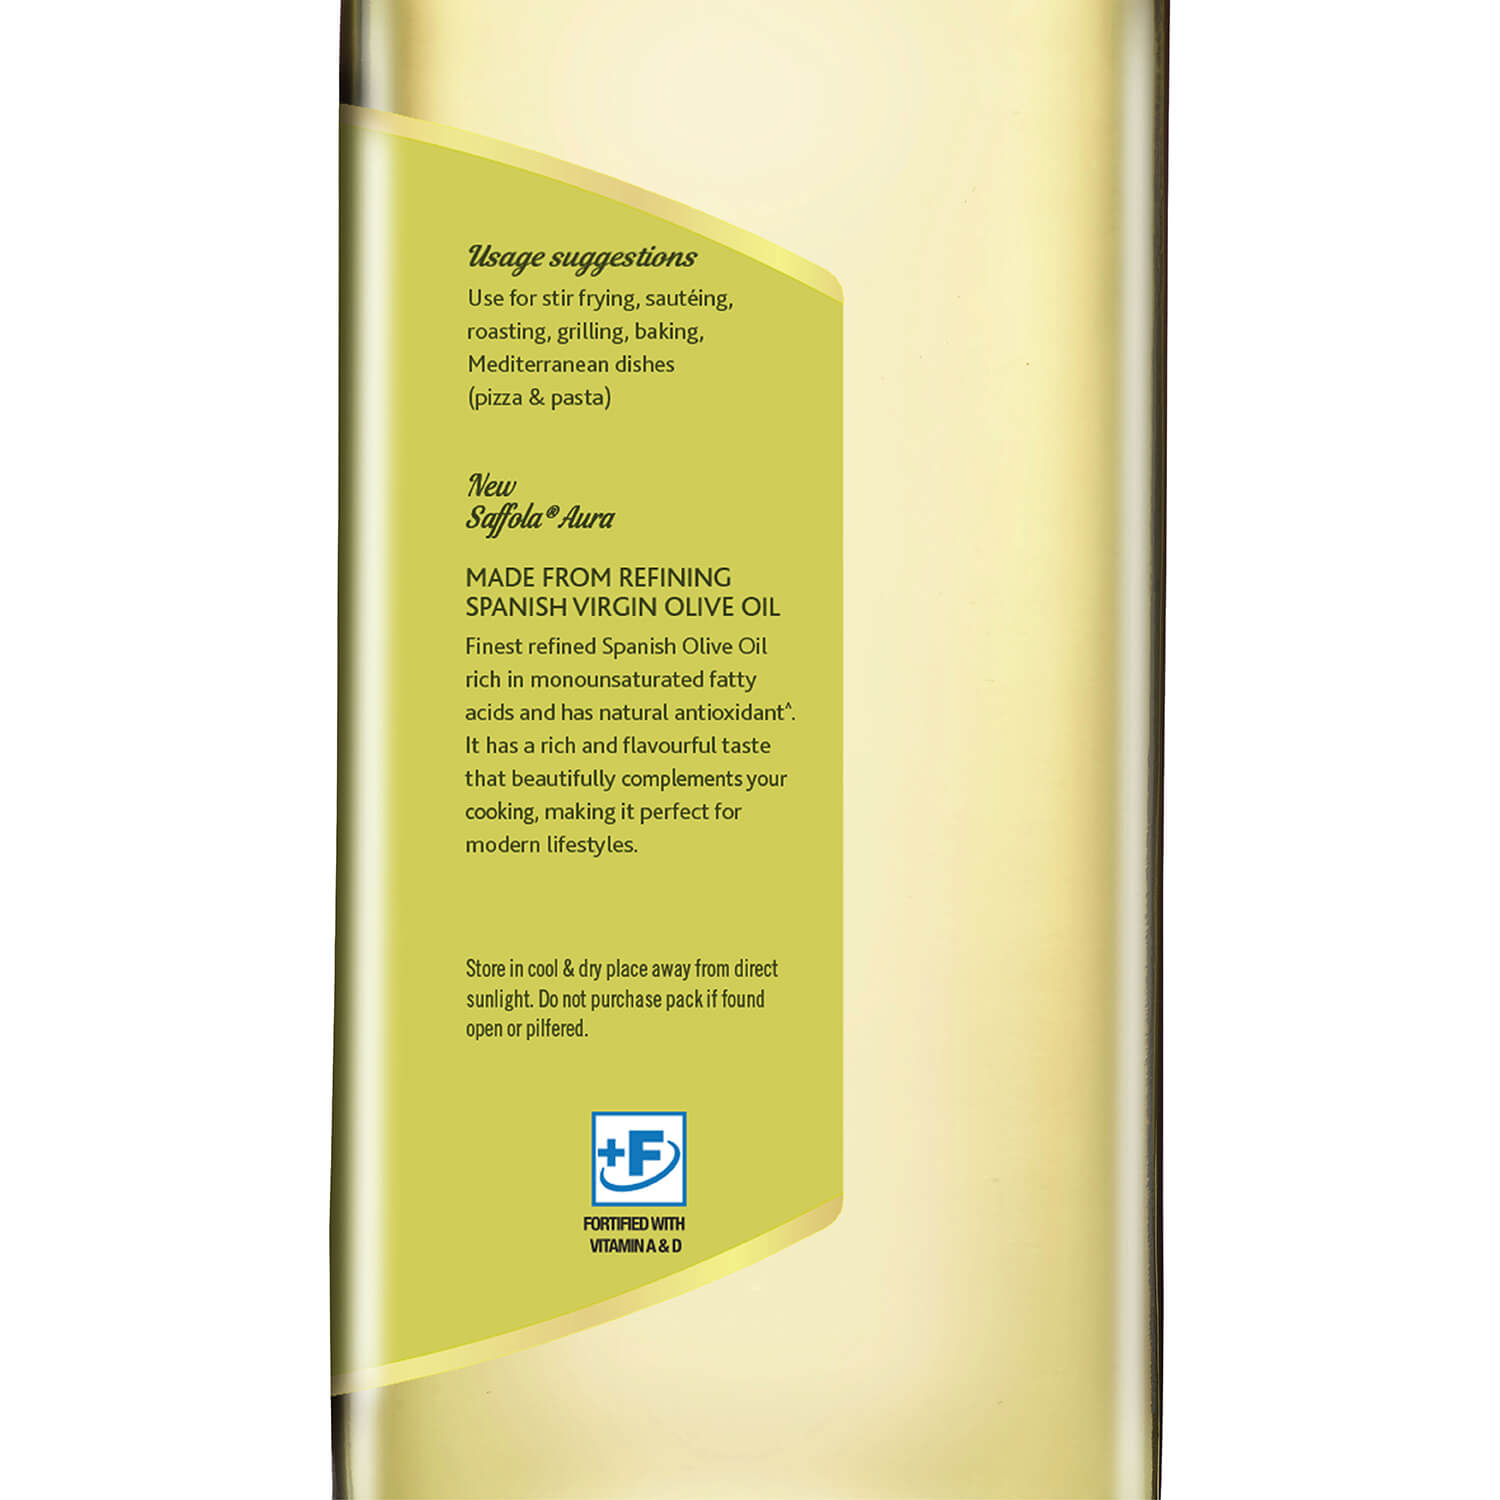 Saffola Aura Refined Olive Oil  - 500ml